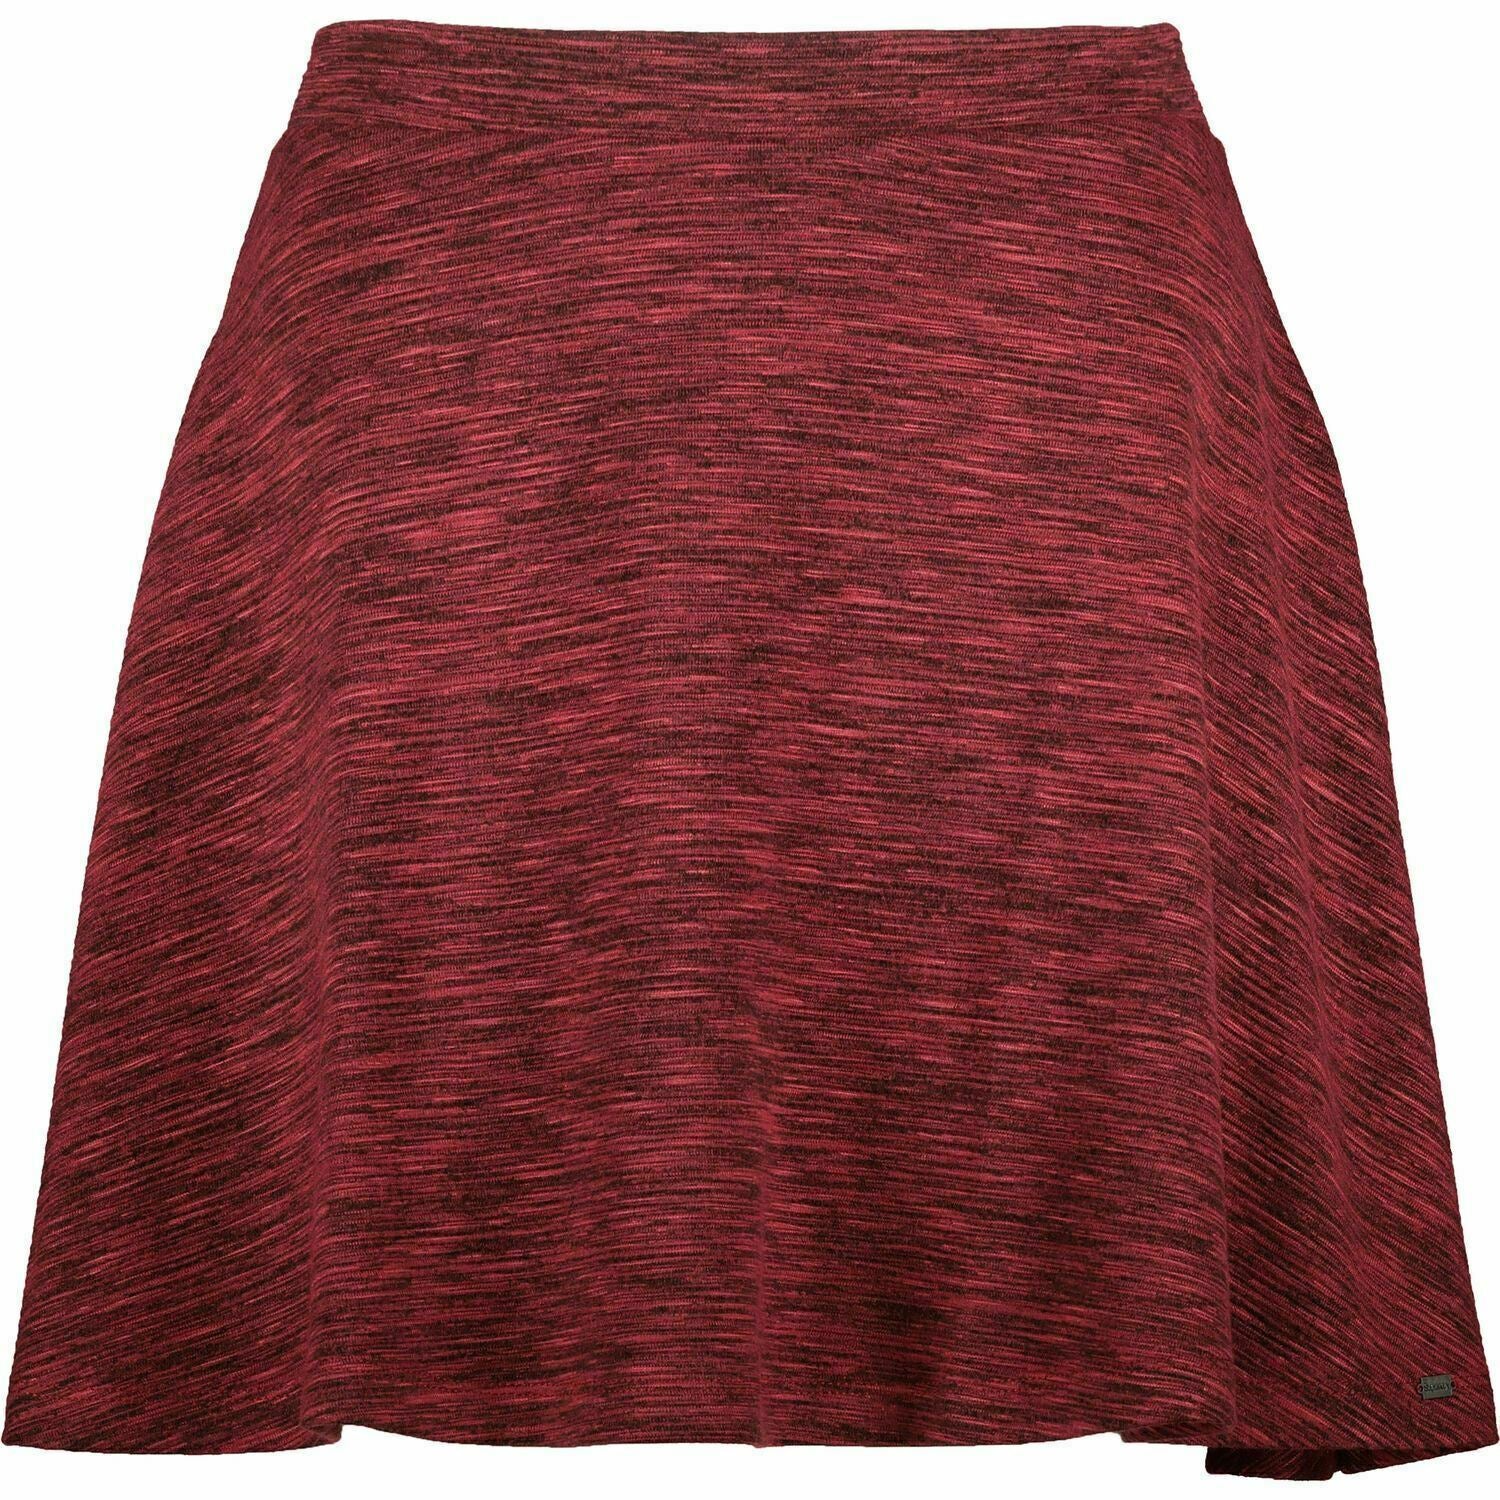 SUPERDRY Women's AUGUSTA RYDELL Skirt, Rocky Red, size M / UK 12